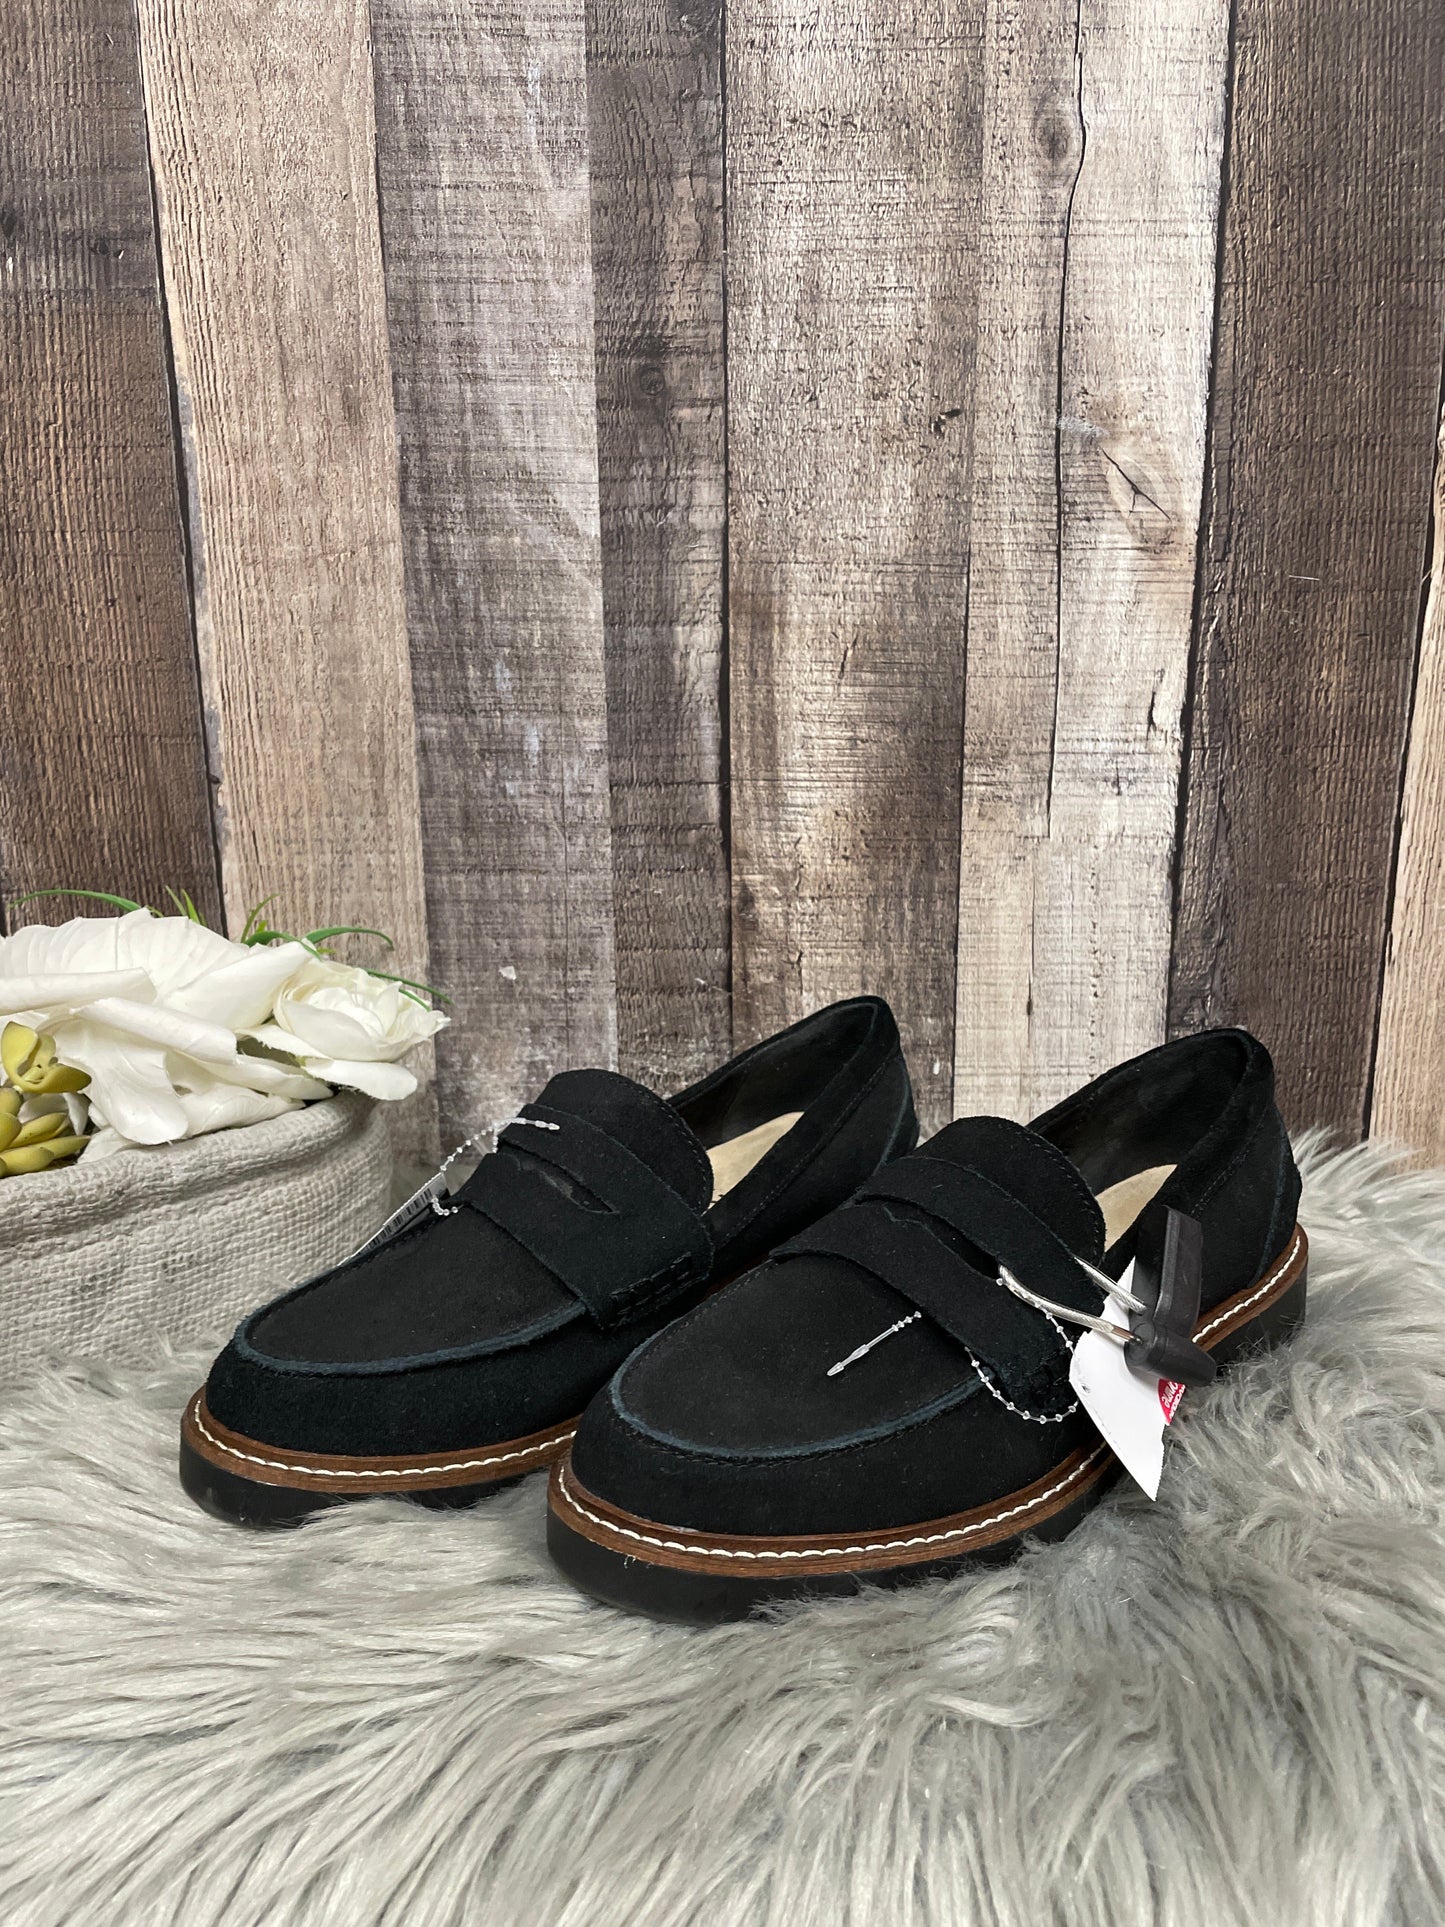 Black Shoes Flats Anne Klein, Size 8